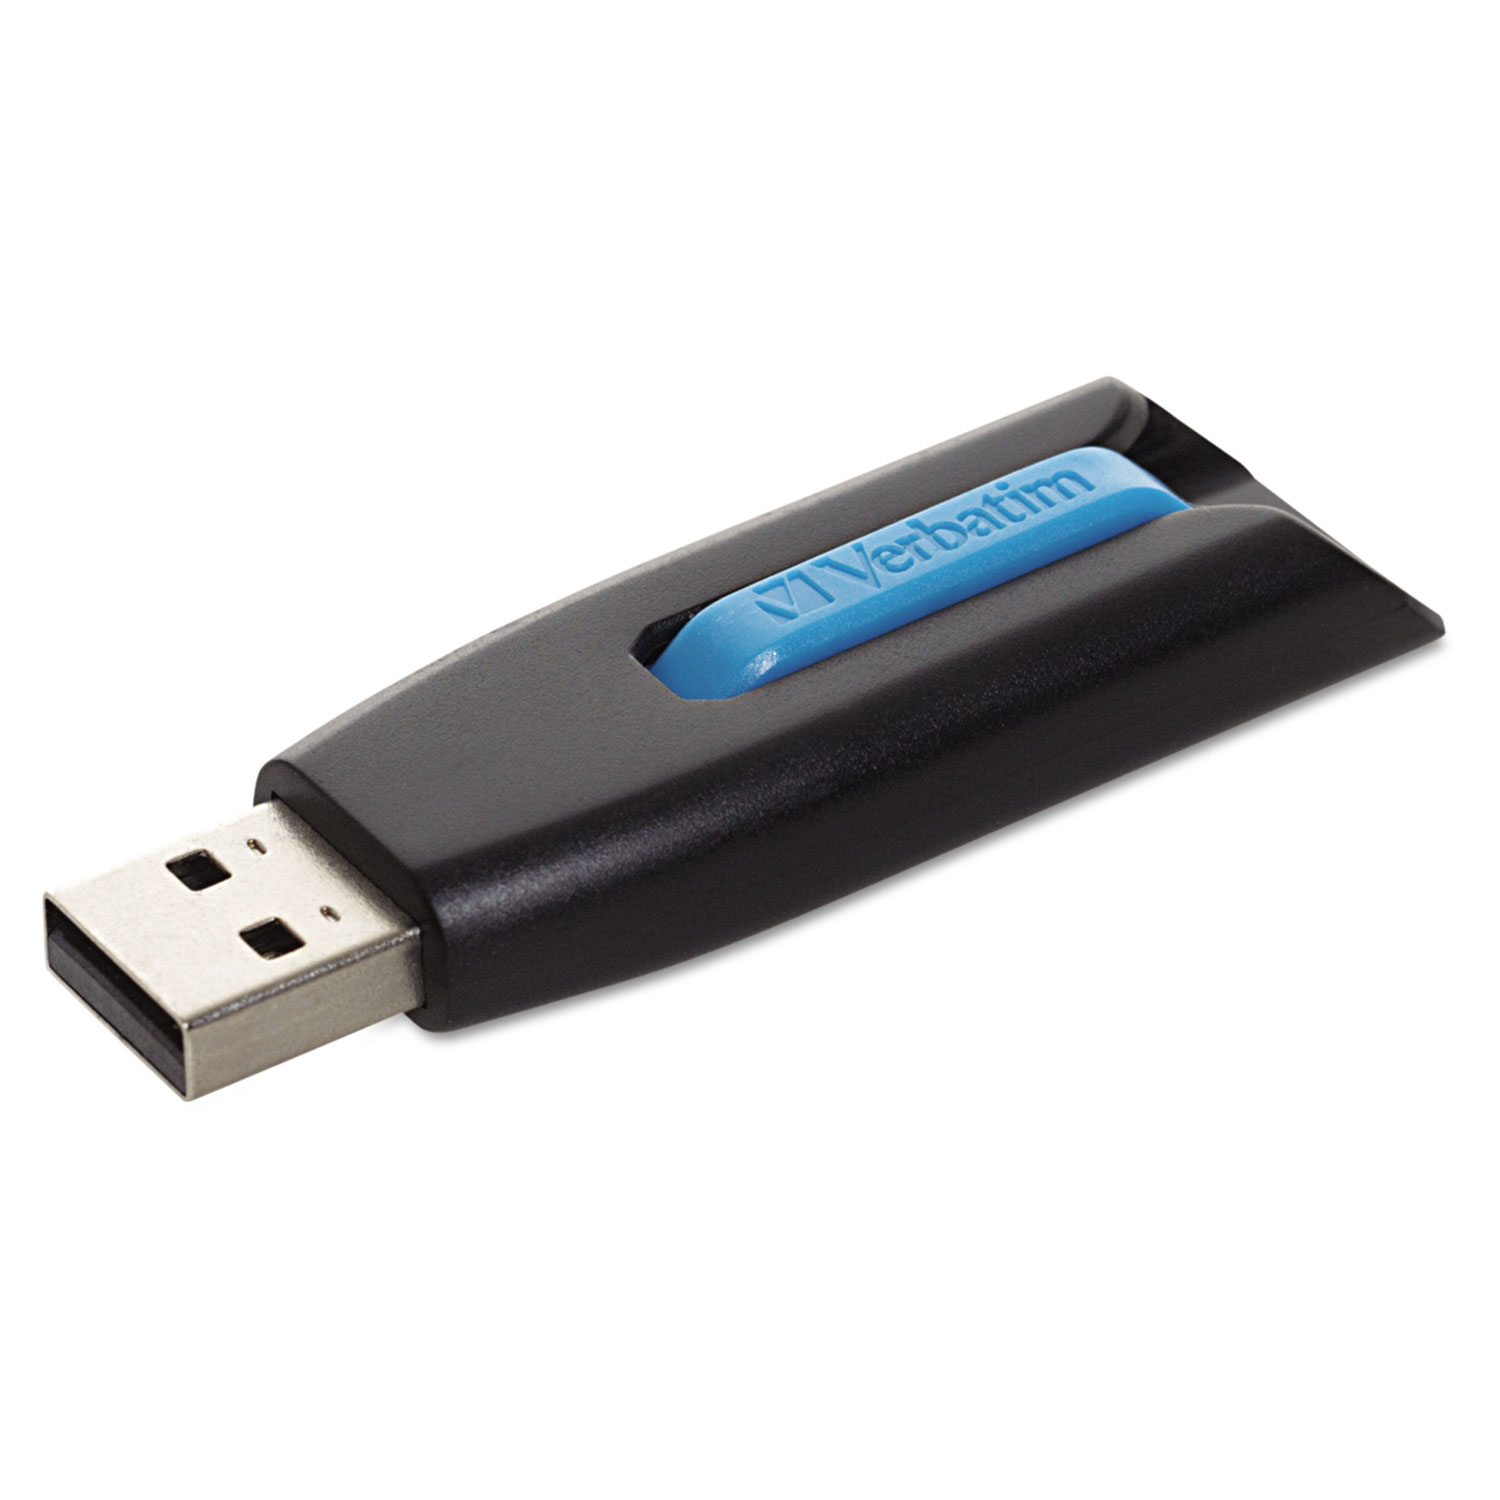 Store n Go V3 USB 3.0 Drive, 16GB, Black/Blue